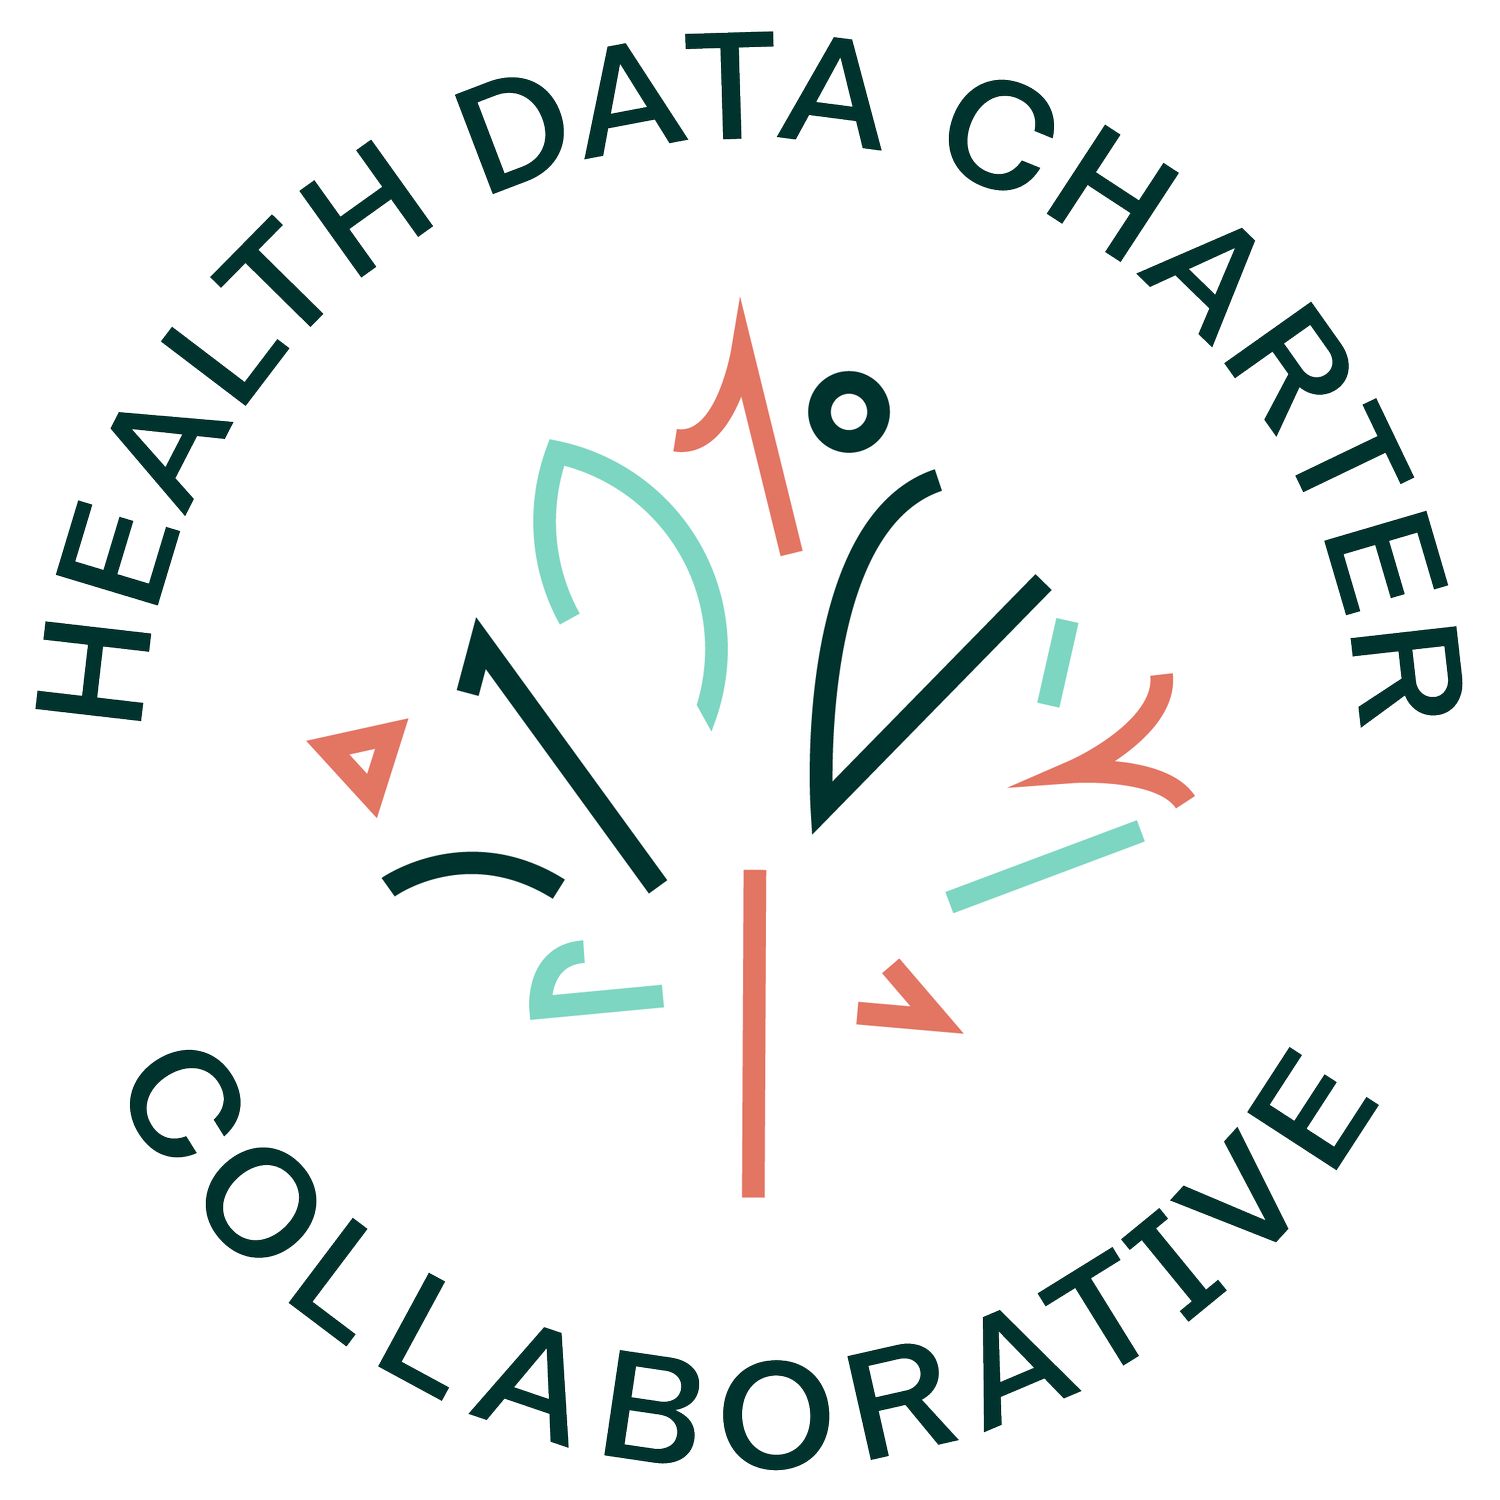 The Health Data Charter Collaborative